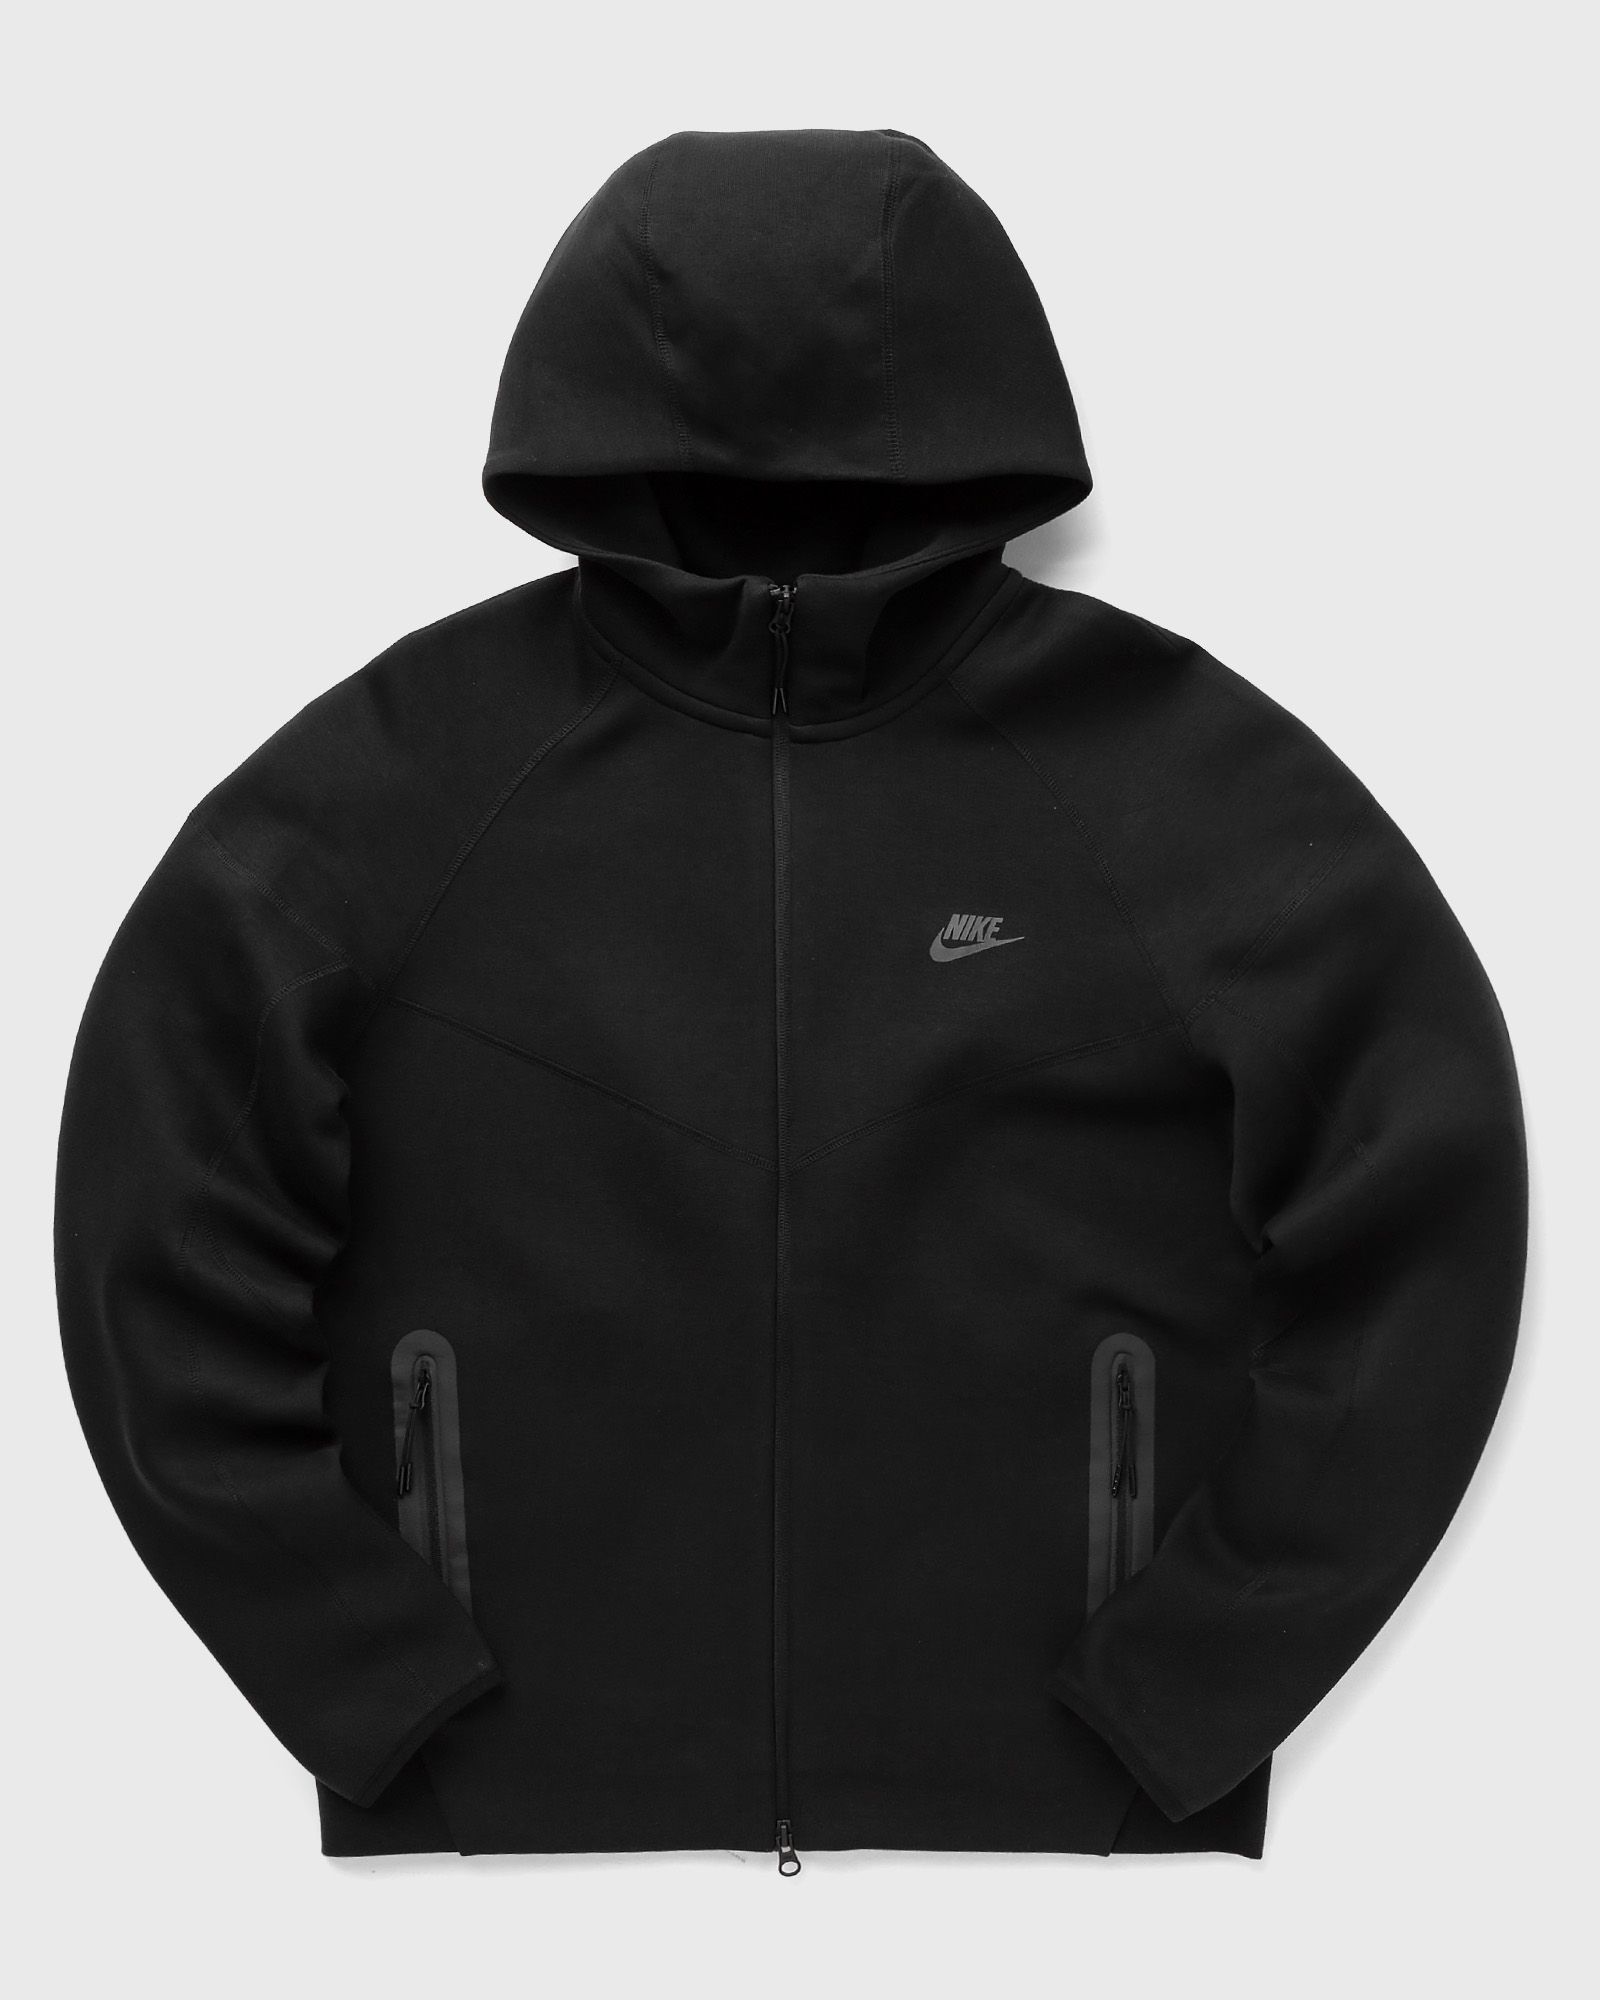 Nike - tech fleece windrunner full-zip hoodie men hoodies|zippers black in größe:xl